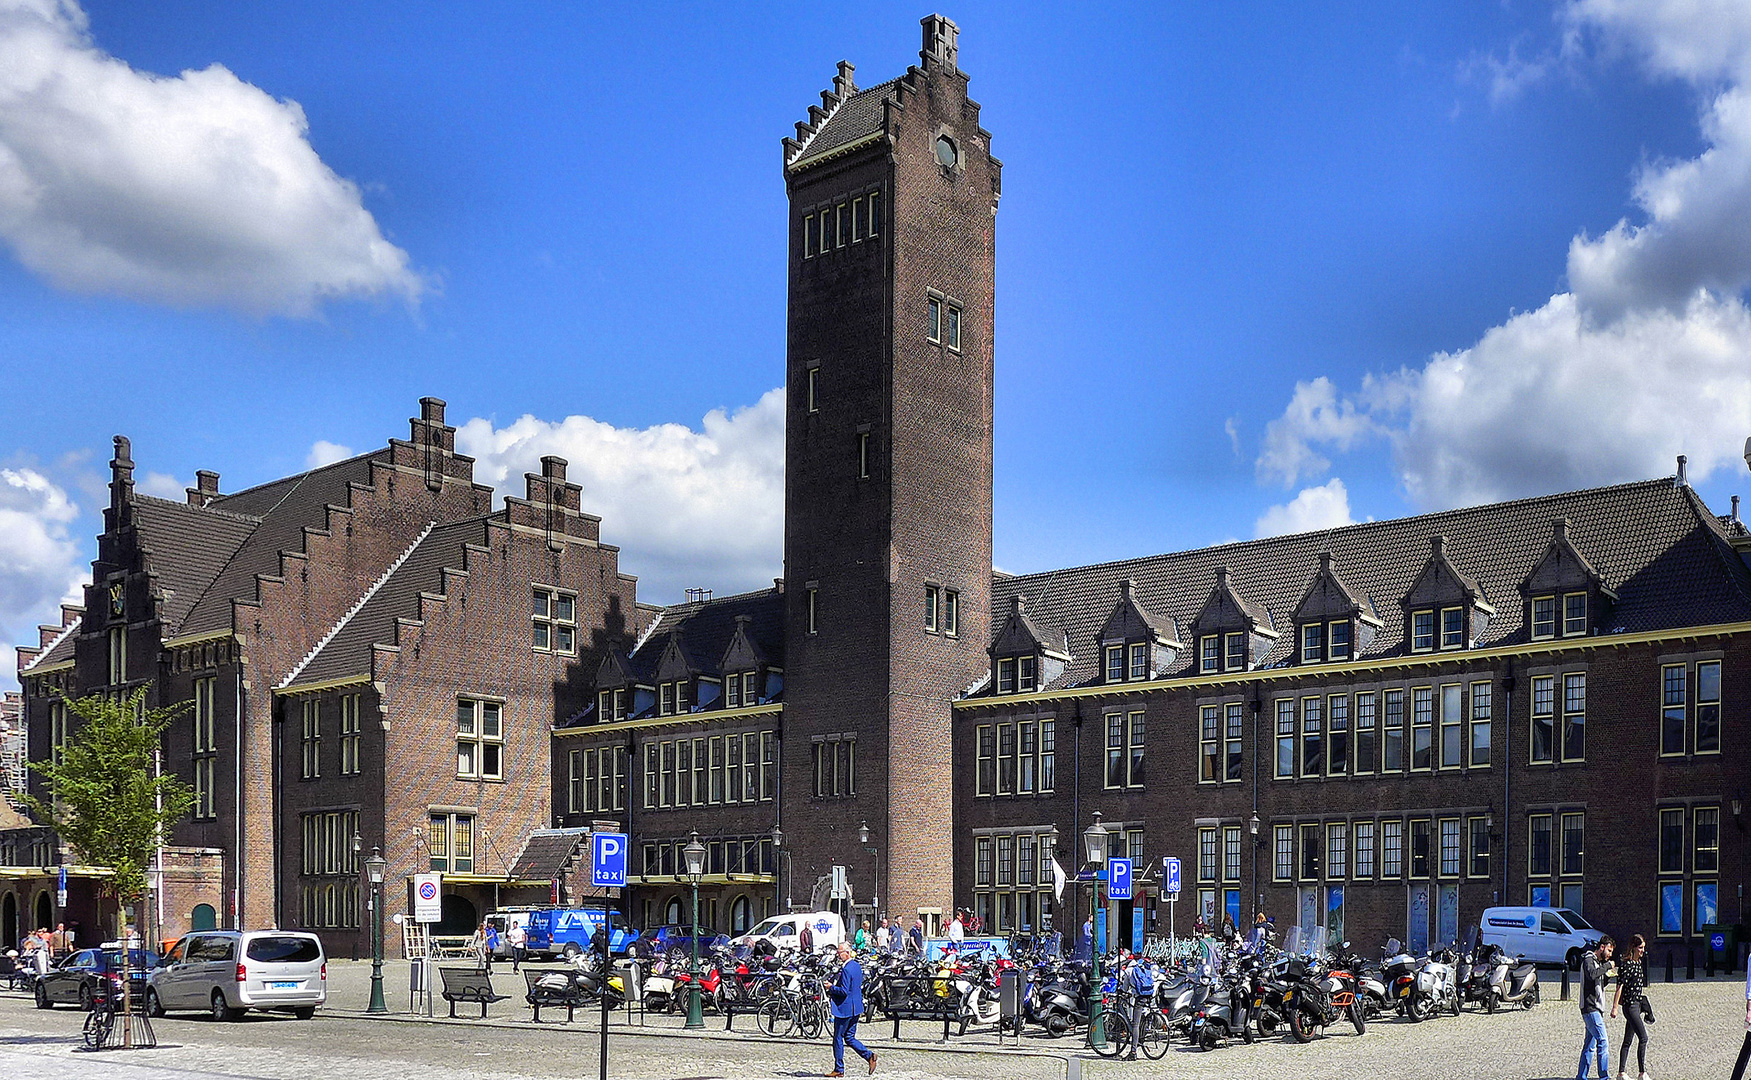 Maastricht Centraal